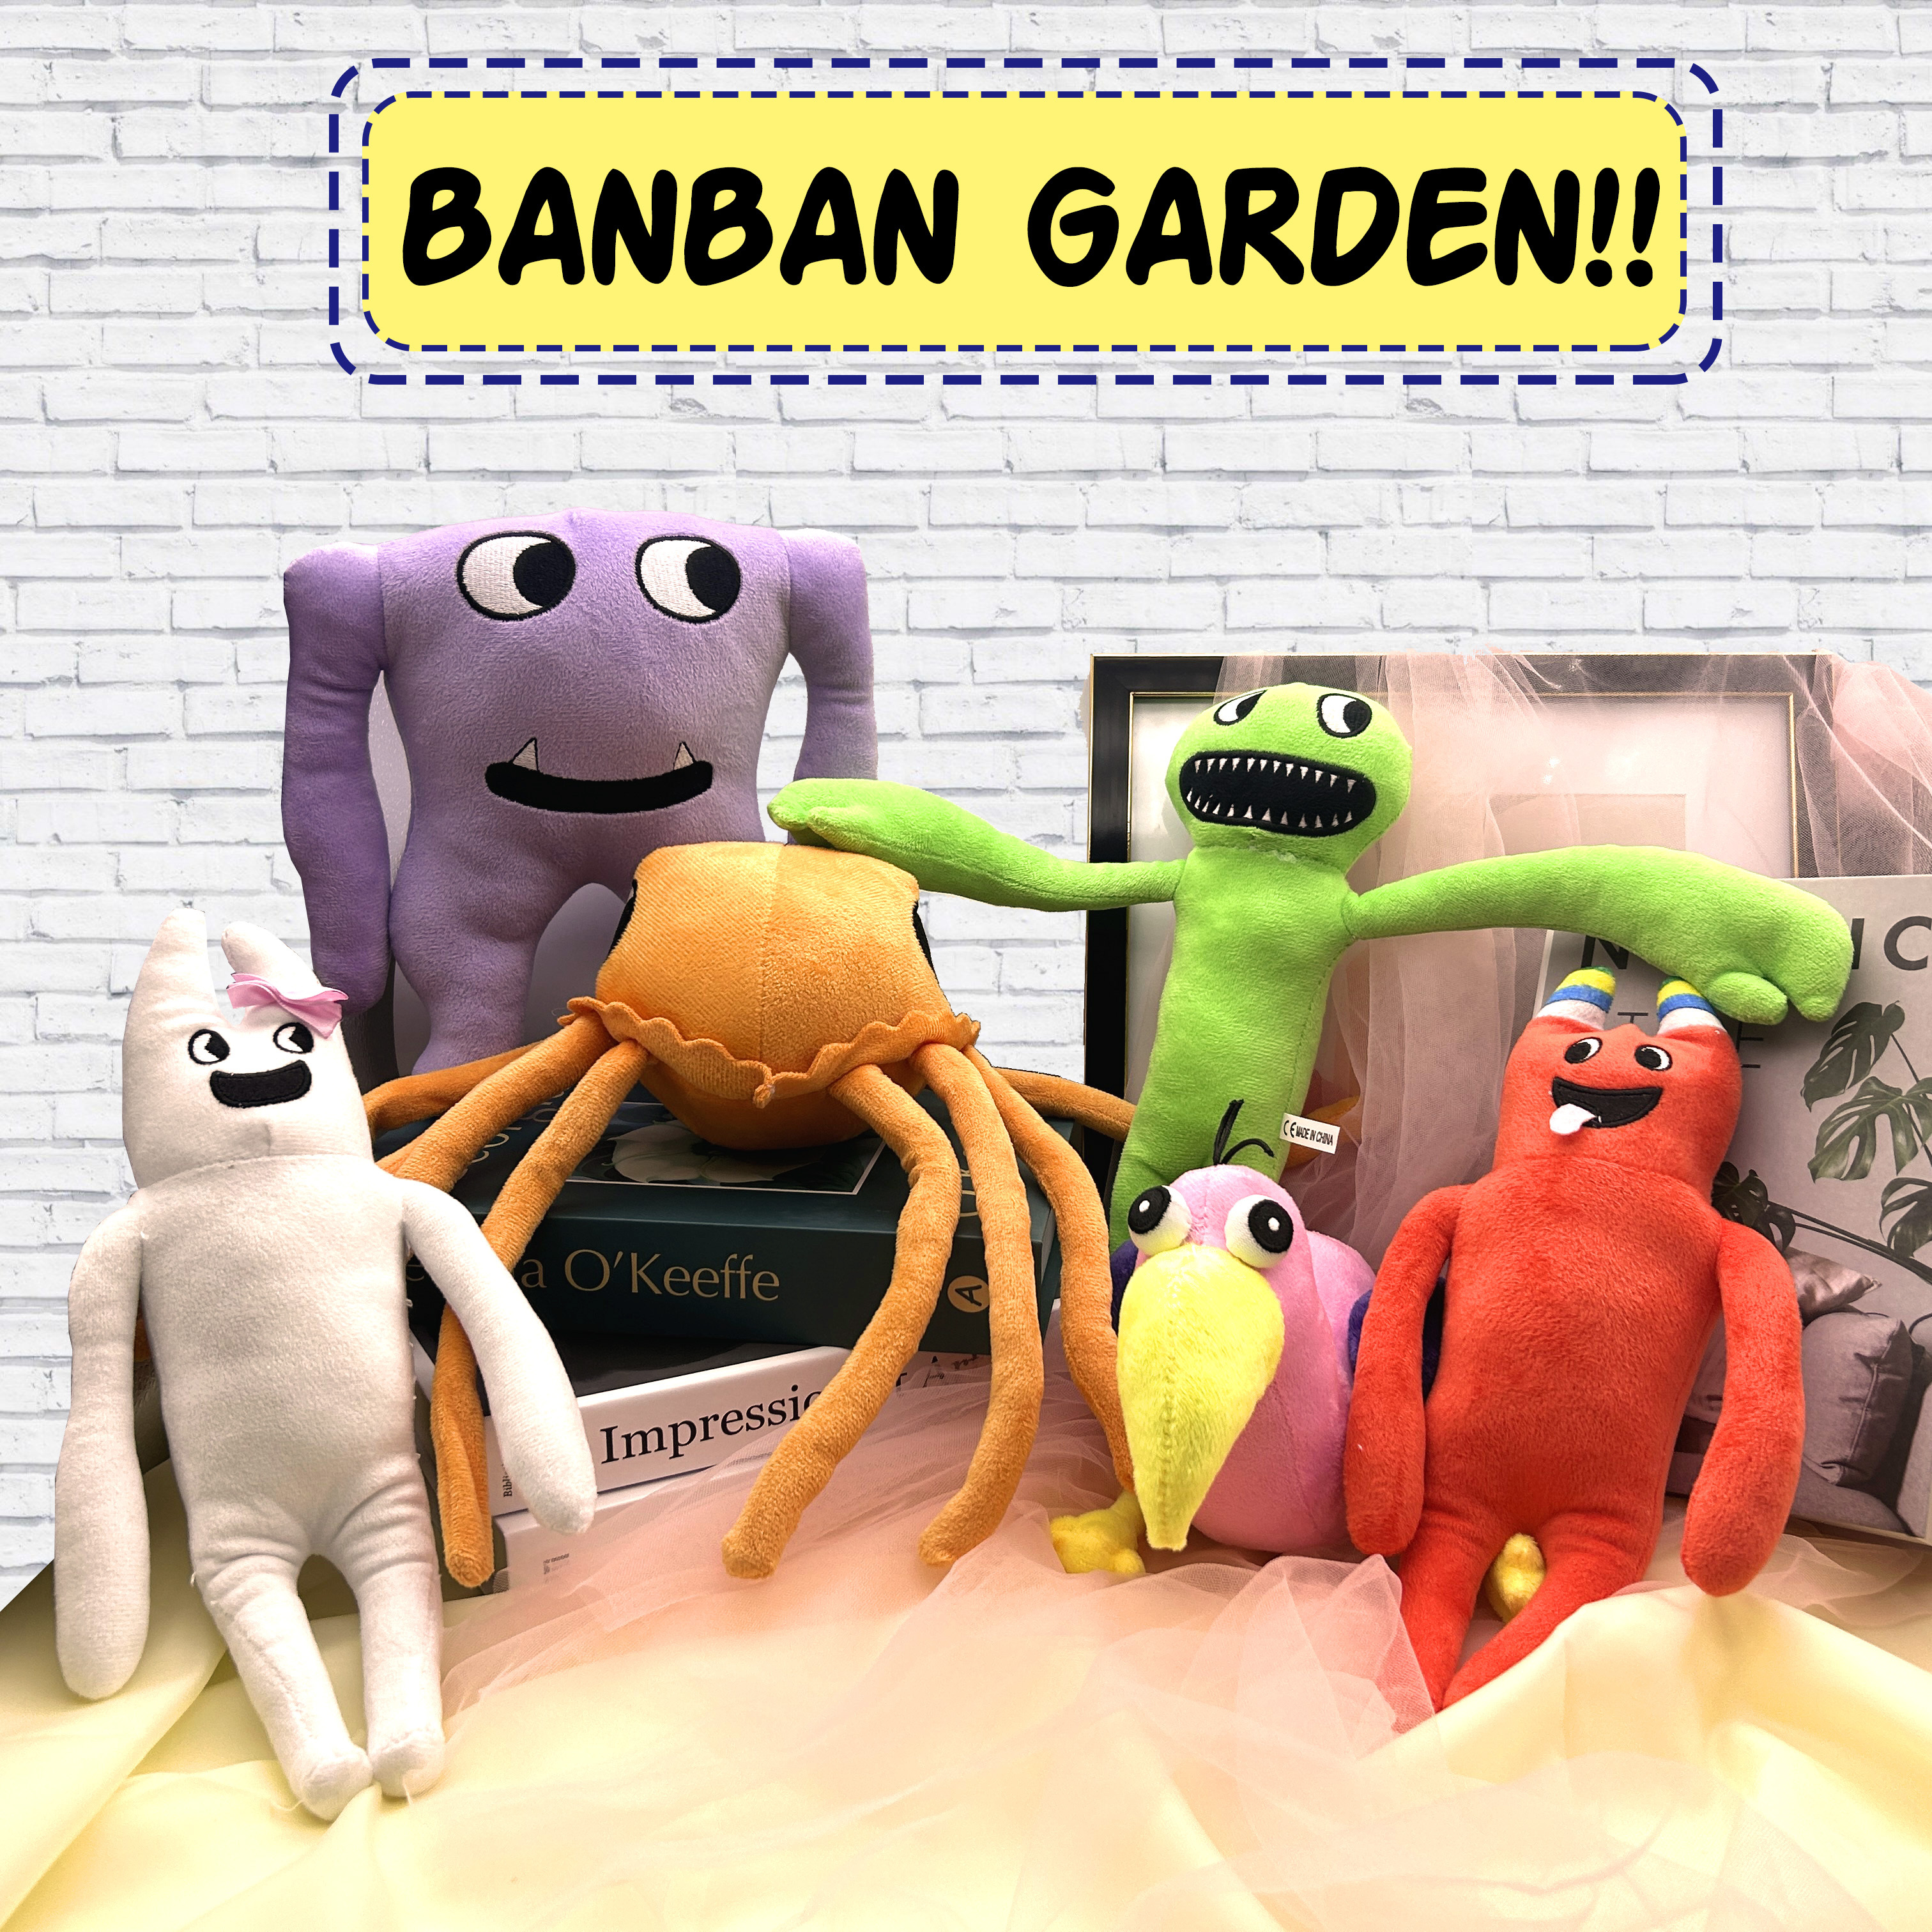 Garten of Banban Class Garden Game Doll Monster Plush Toys Black